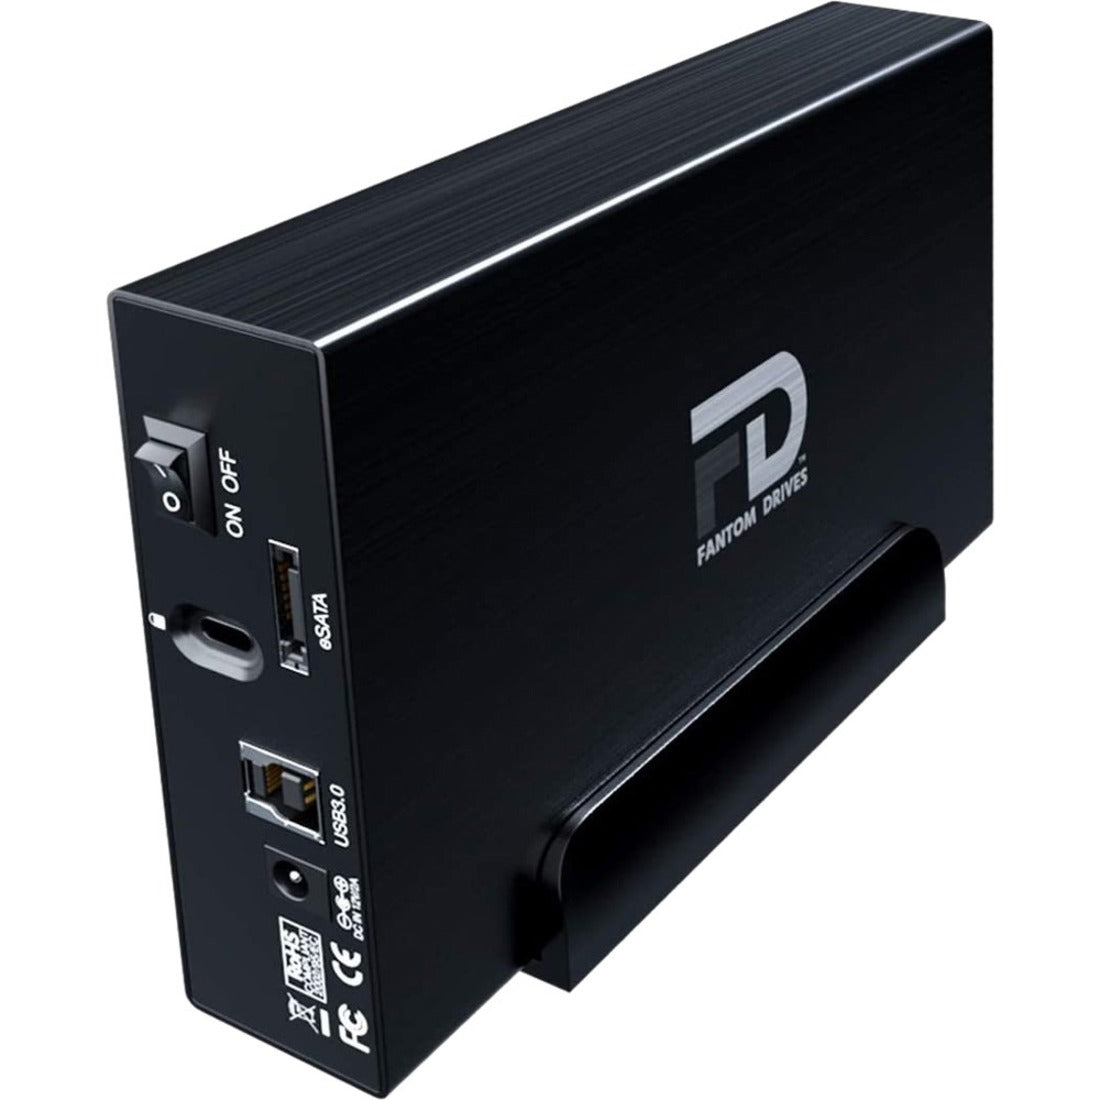 Fantom Drives 14TB External Hard Drive - GFORCE 3 - USB 3 eSATA Aluminum Black GF3B14000EU